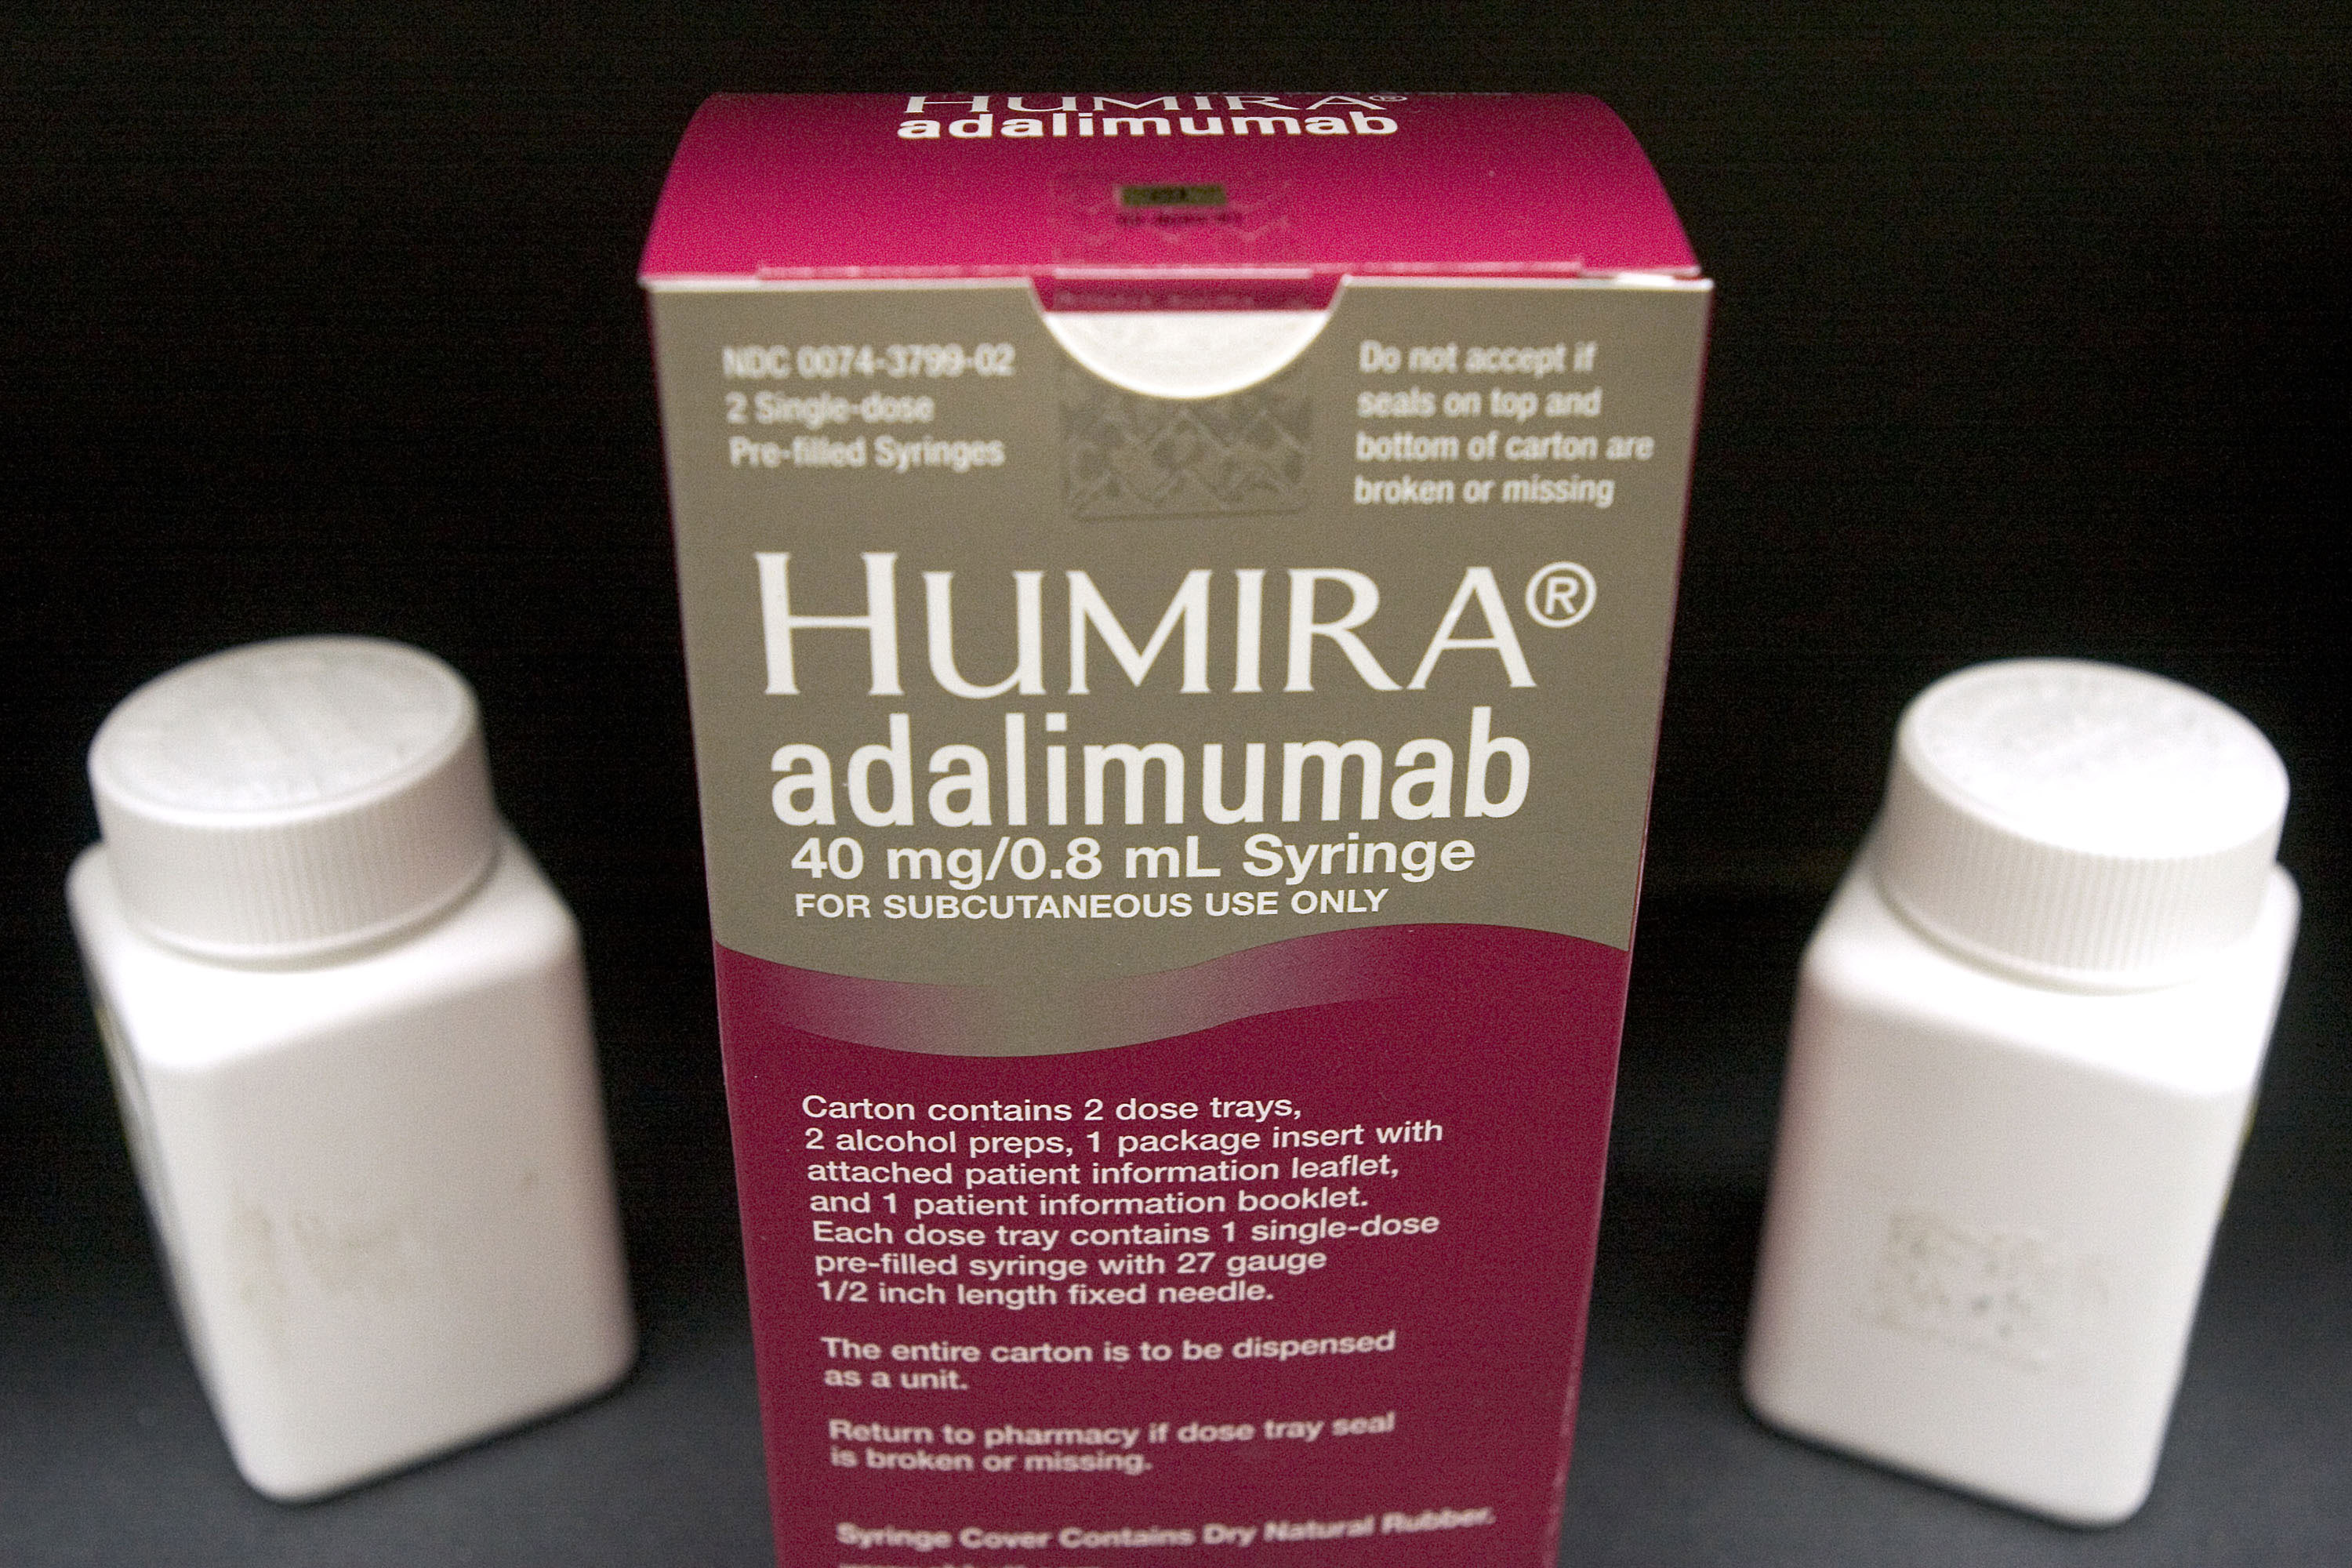 A box of the medication Humira.